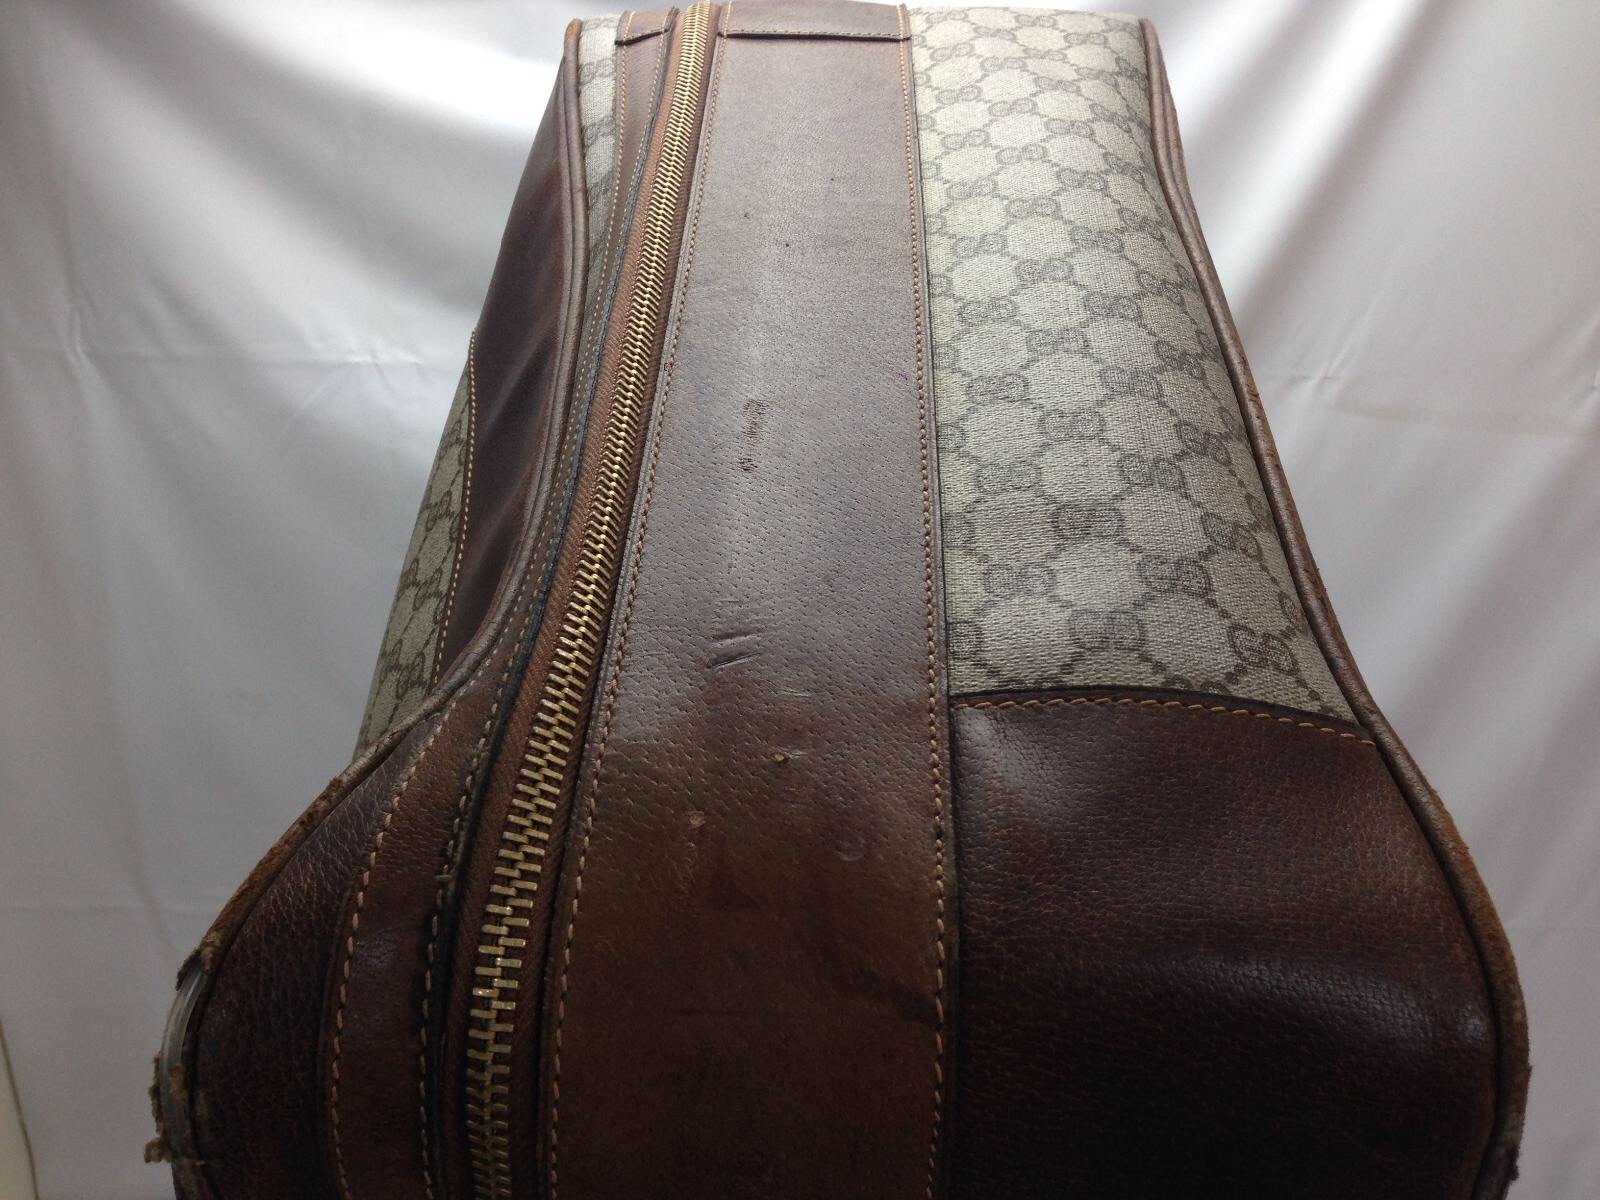 Gucci XL Supreme GG Monogram Web Suitcase Luggage Soft Trunk 62gz429s